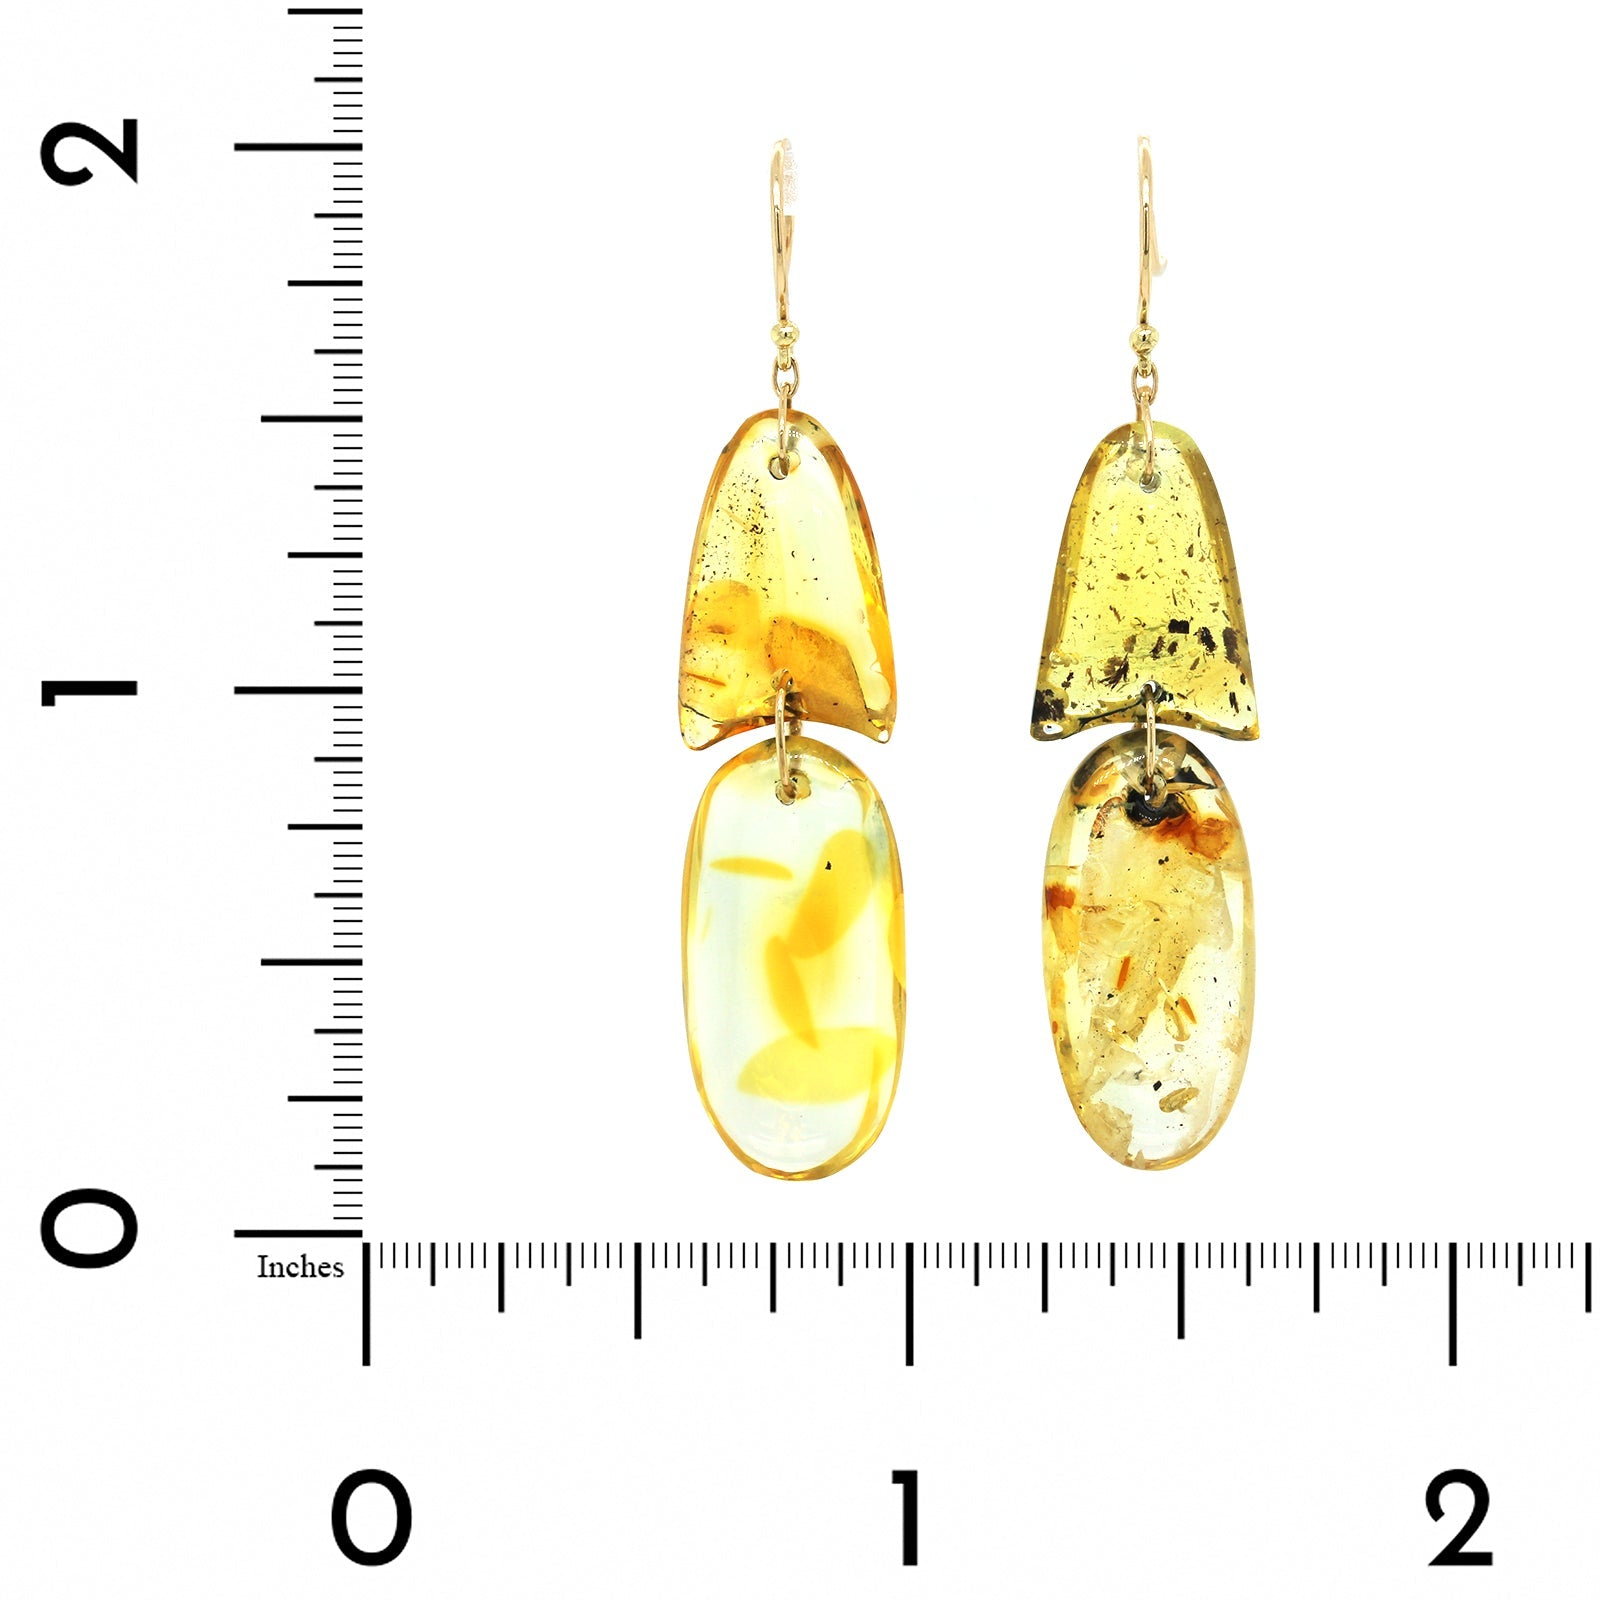 18K Yellow Gold Amber Drop Earrings